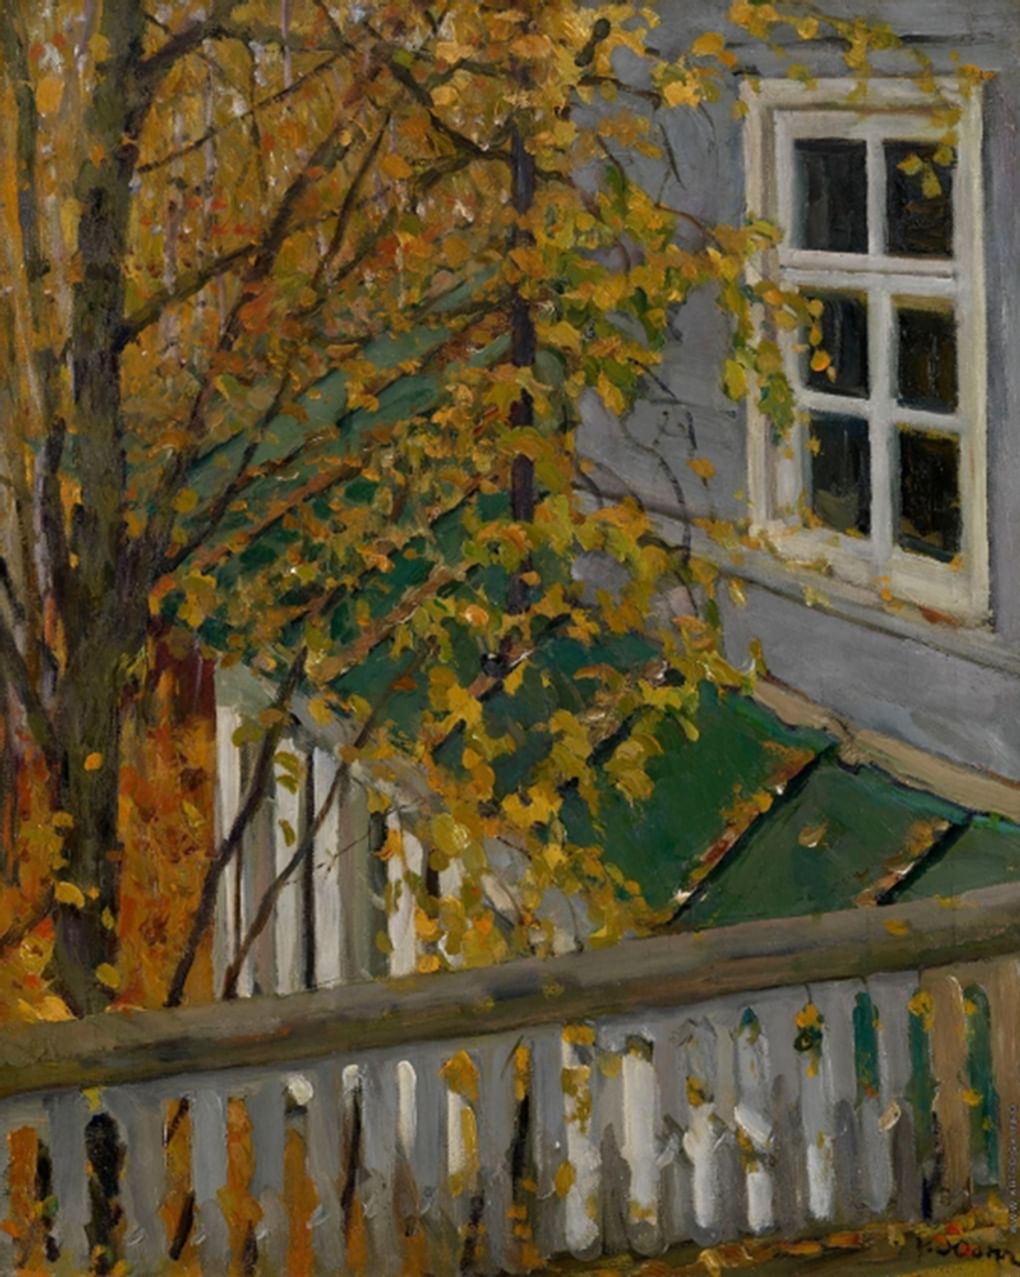 Константин Юон. Вид с балкона осенью (фрагмент). 1910. Частное собрание